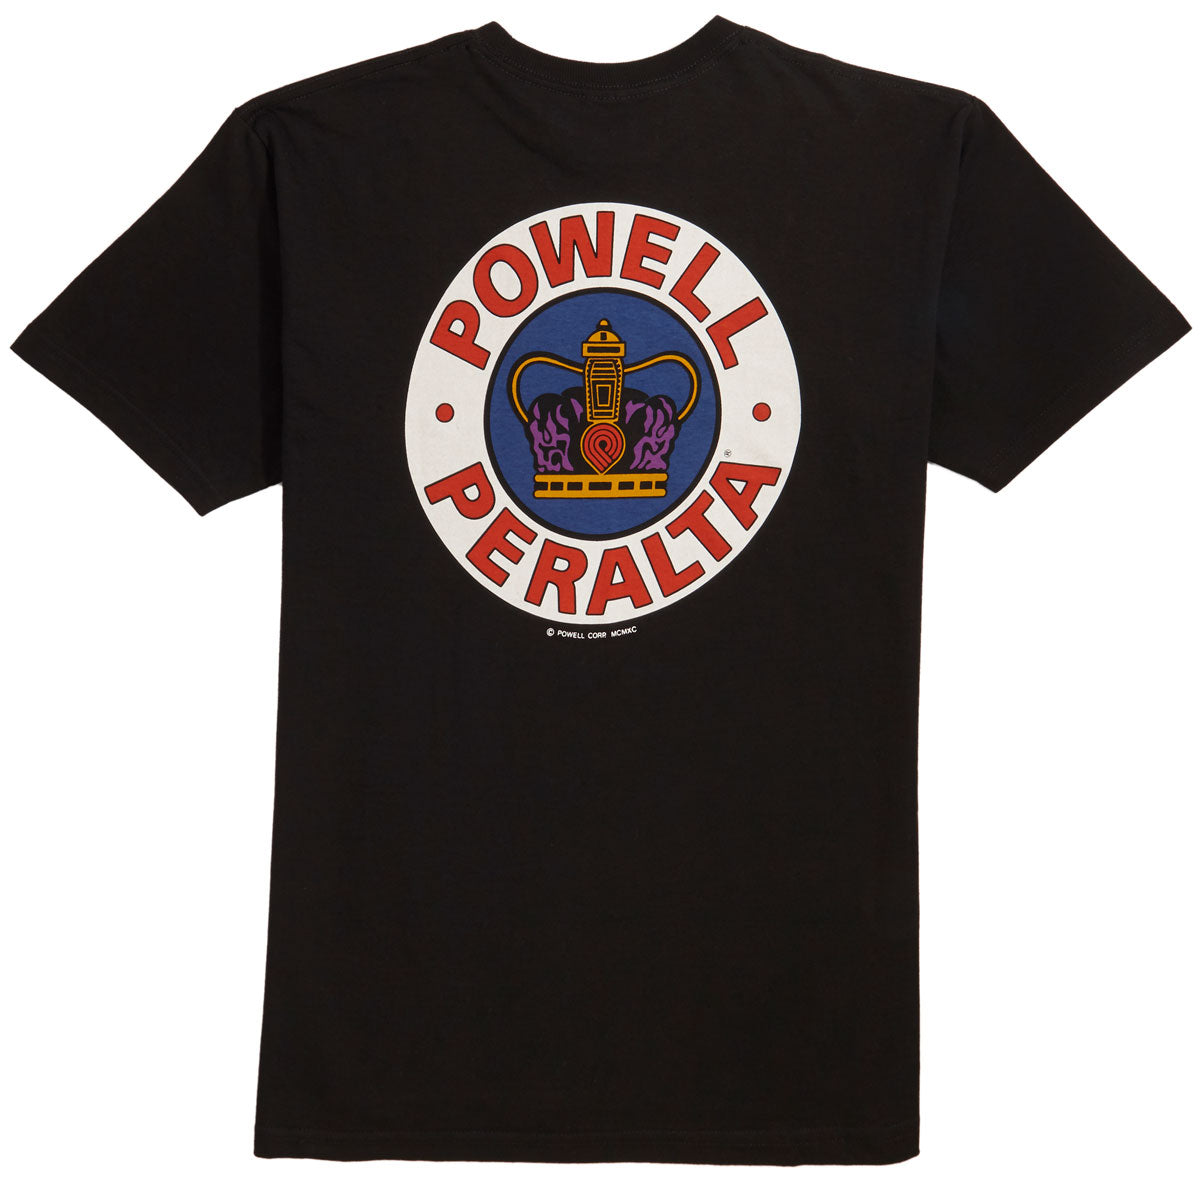 Powell-Peralta Supreme T-Shirt - Black image 2